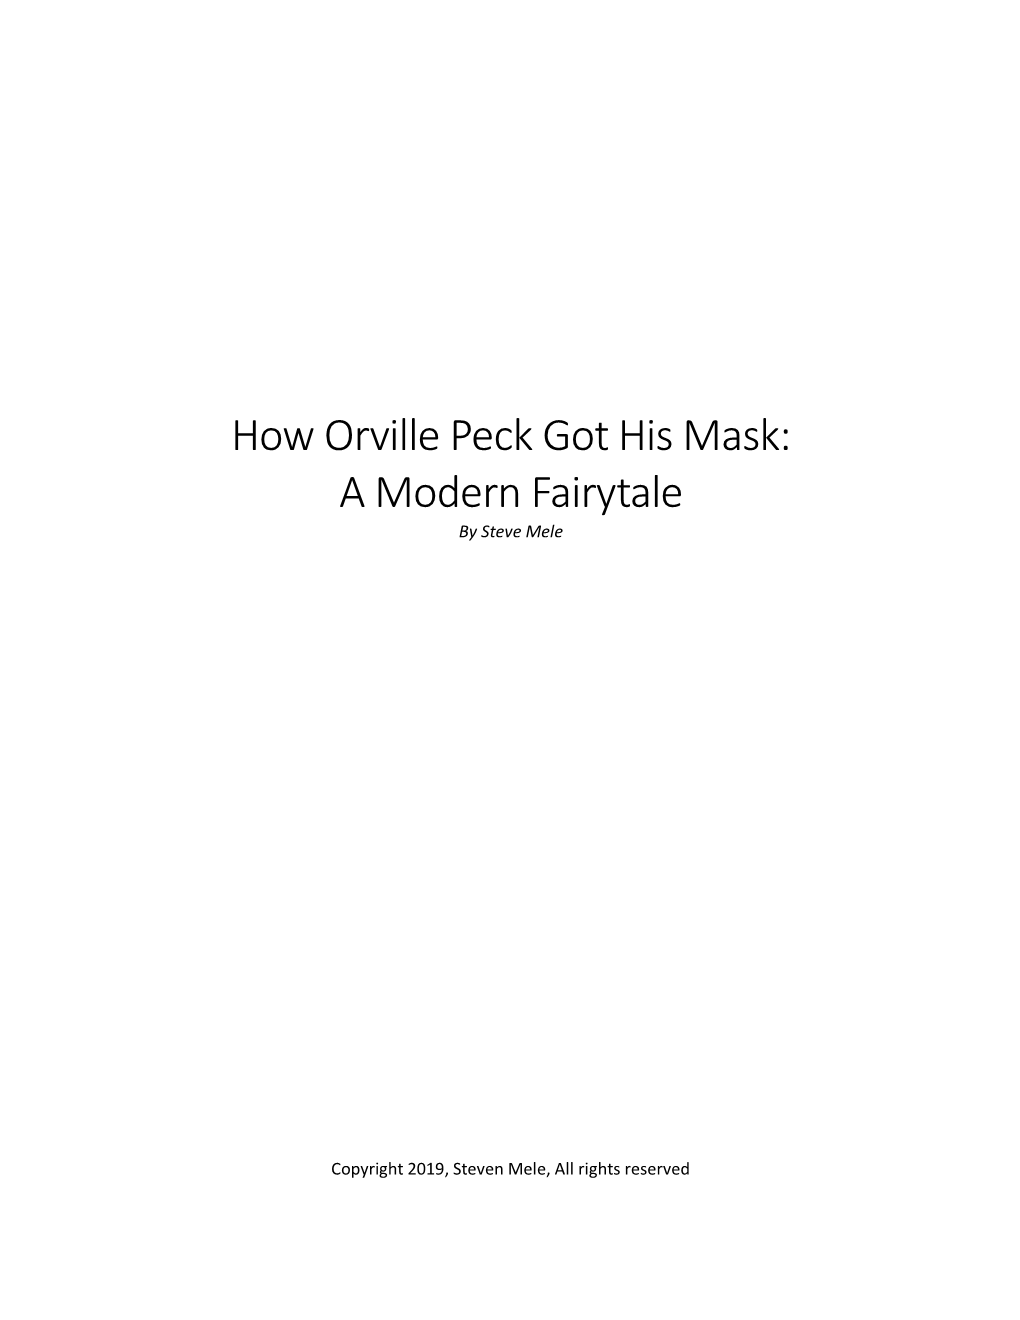 How Orville Peck Got His Mask: a Modern Fairytale by Steve Mele